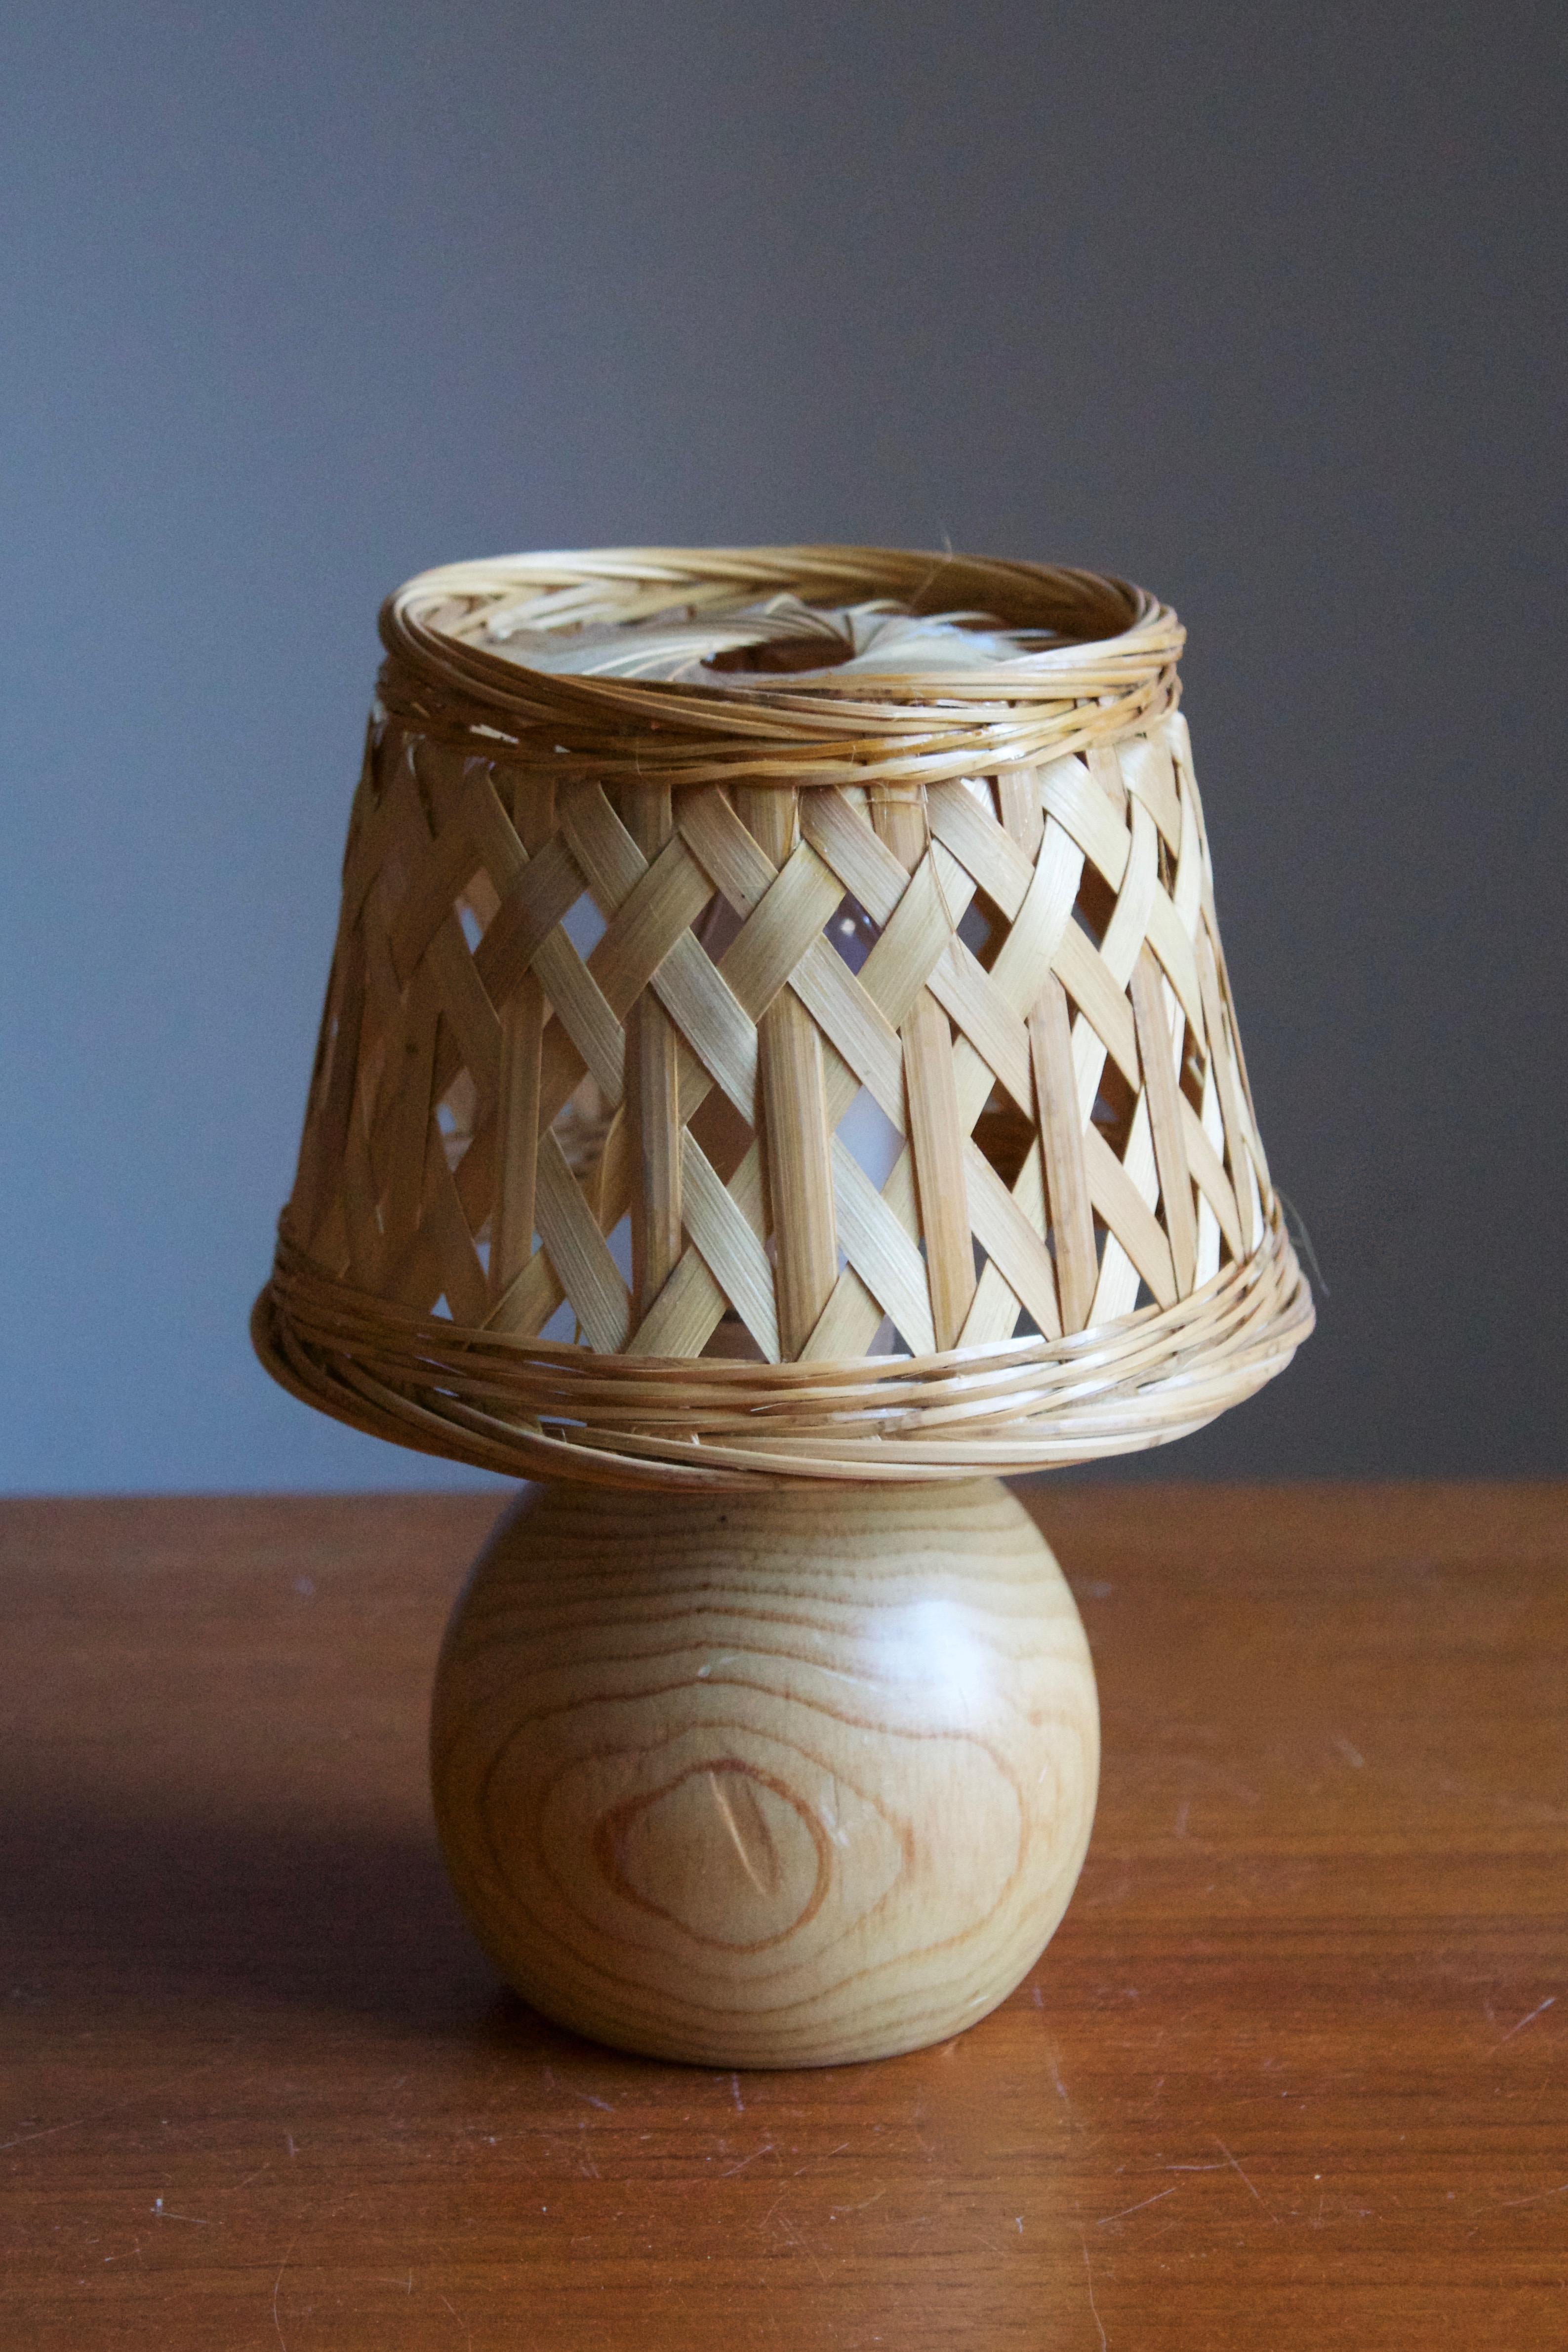 small rattan table lamp